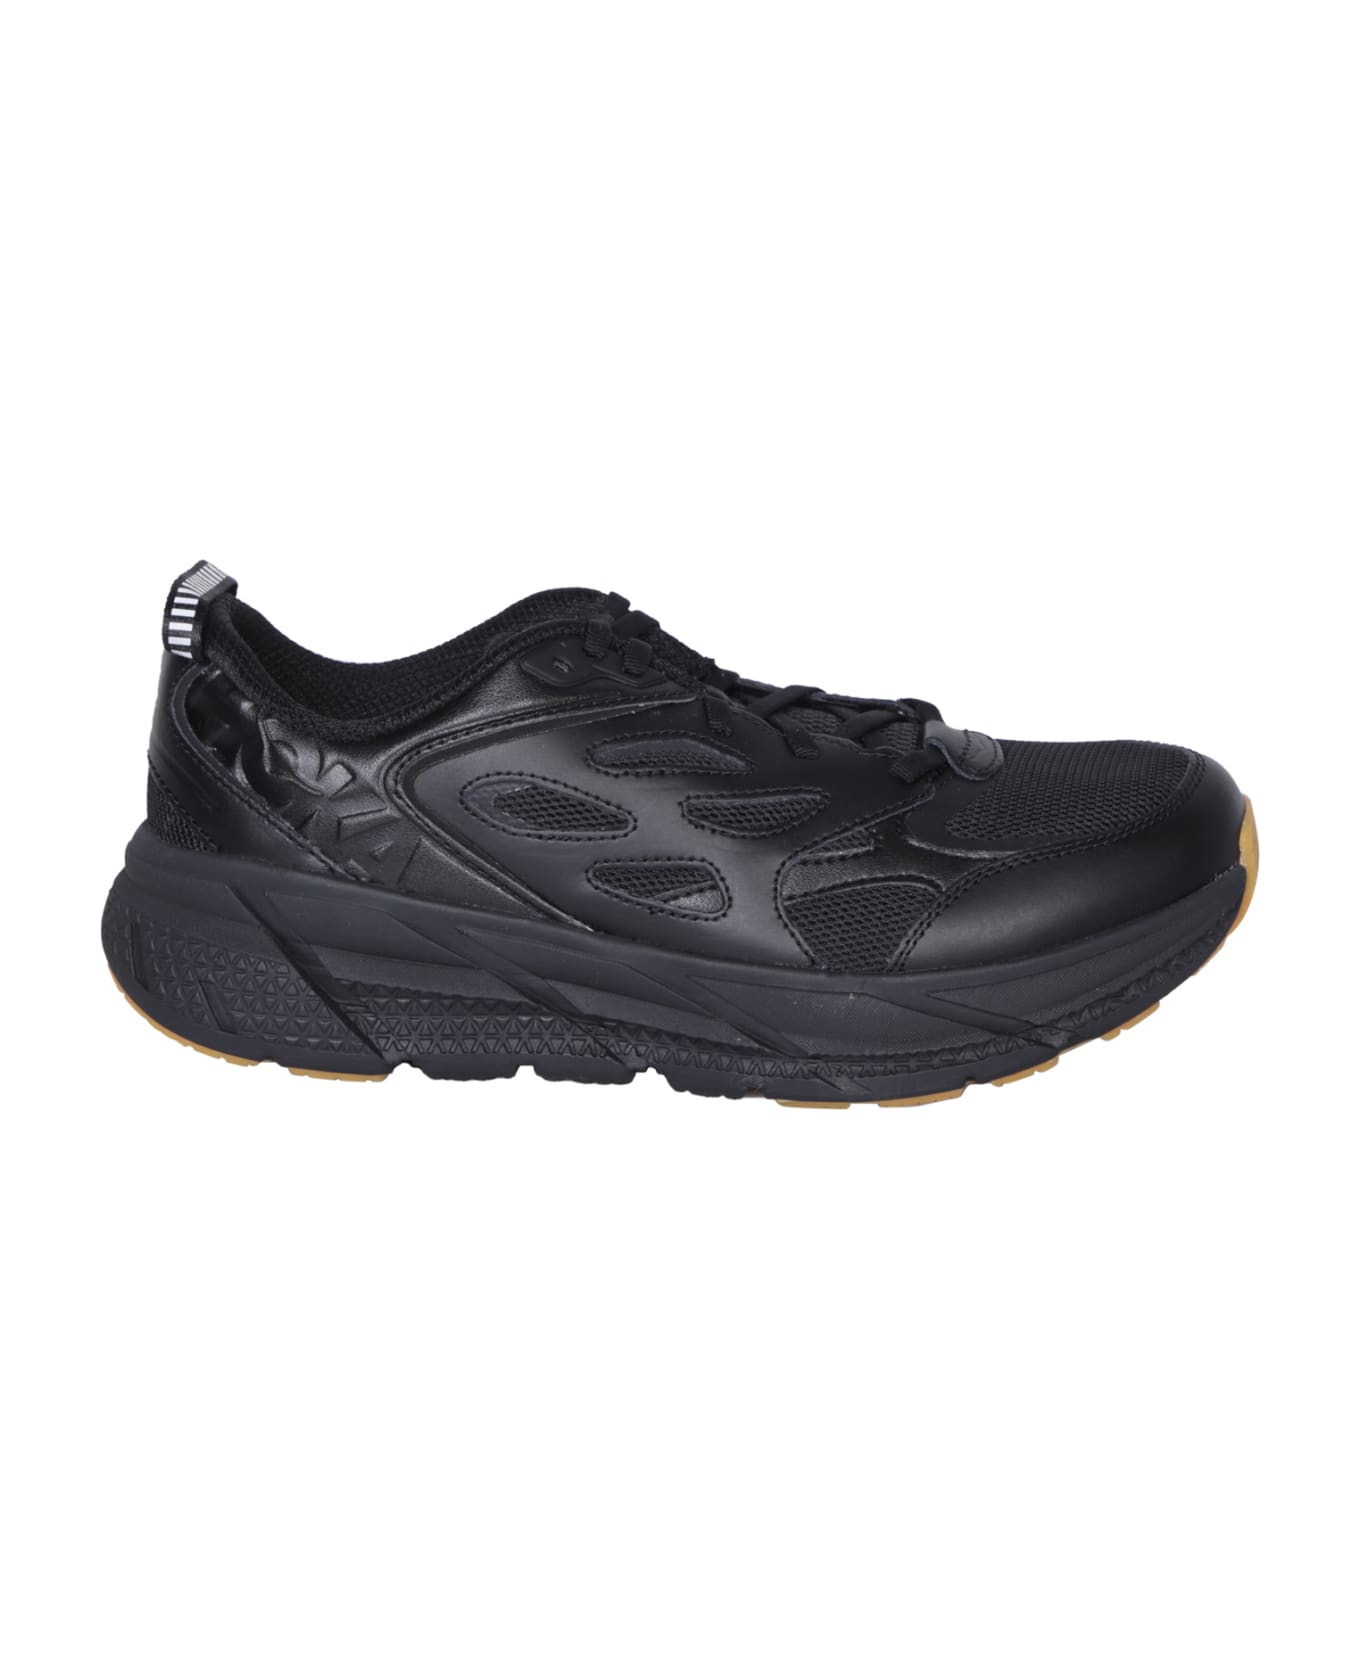 Hoka One One Clifton L Black Sneakers - Black